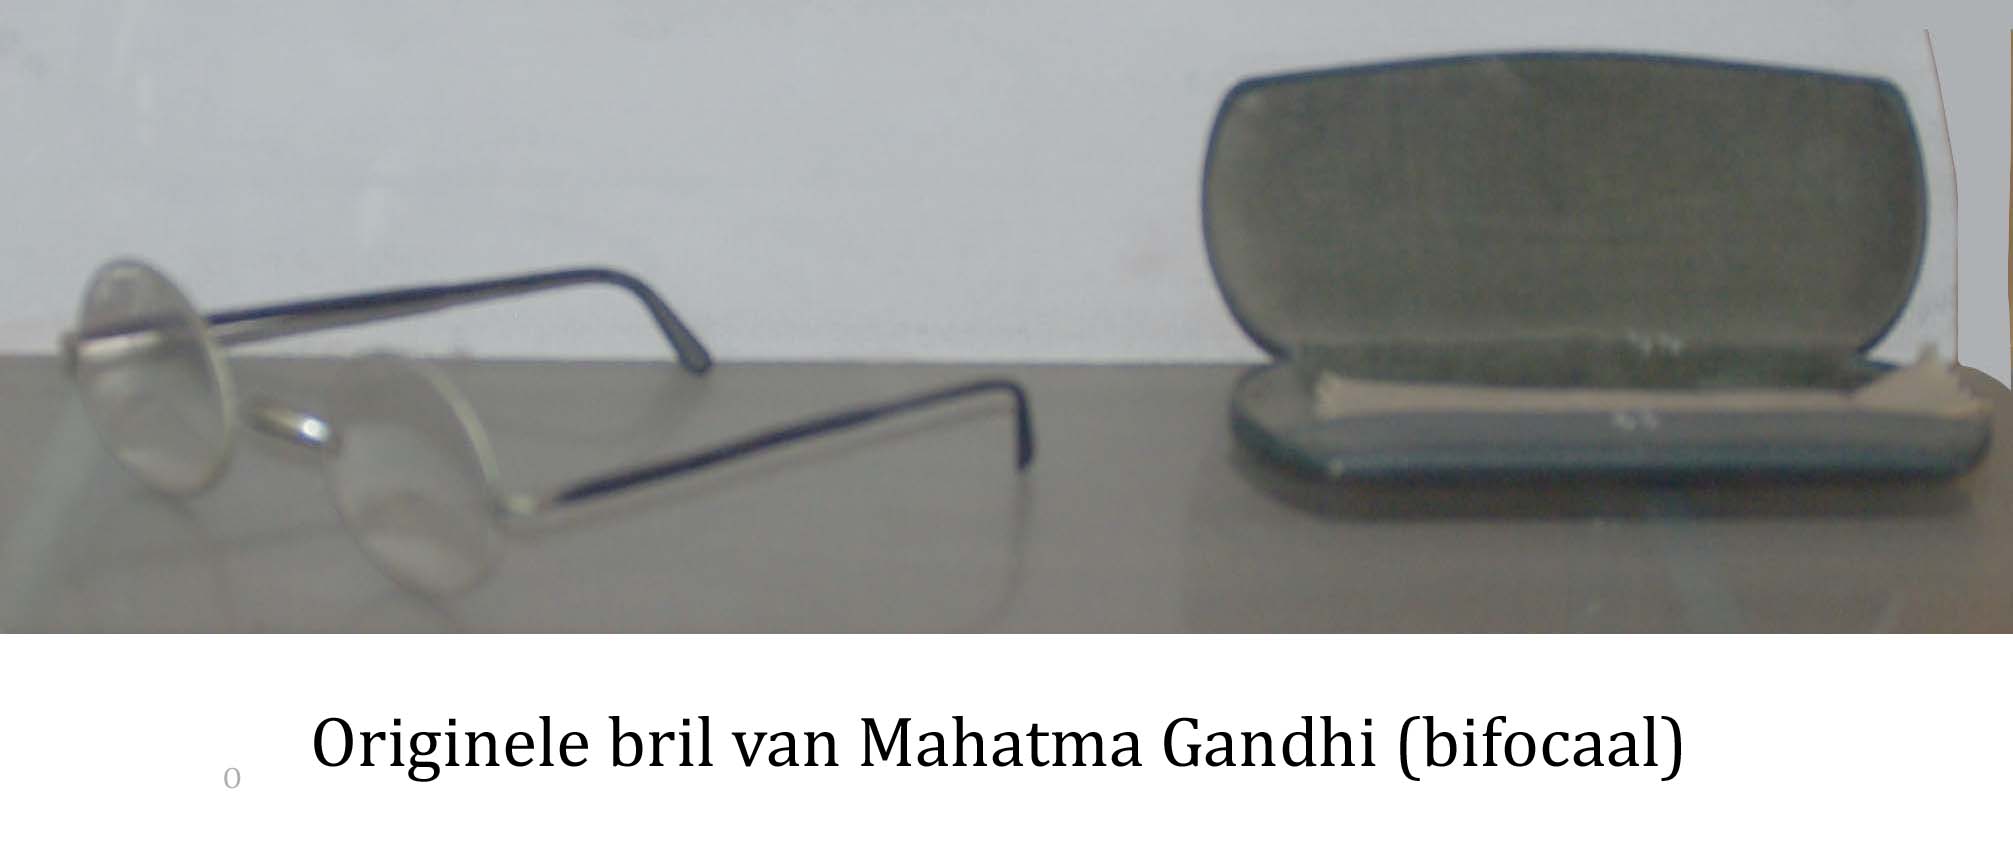 originele bifocale bril van M Gandhi